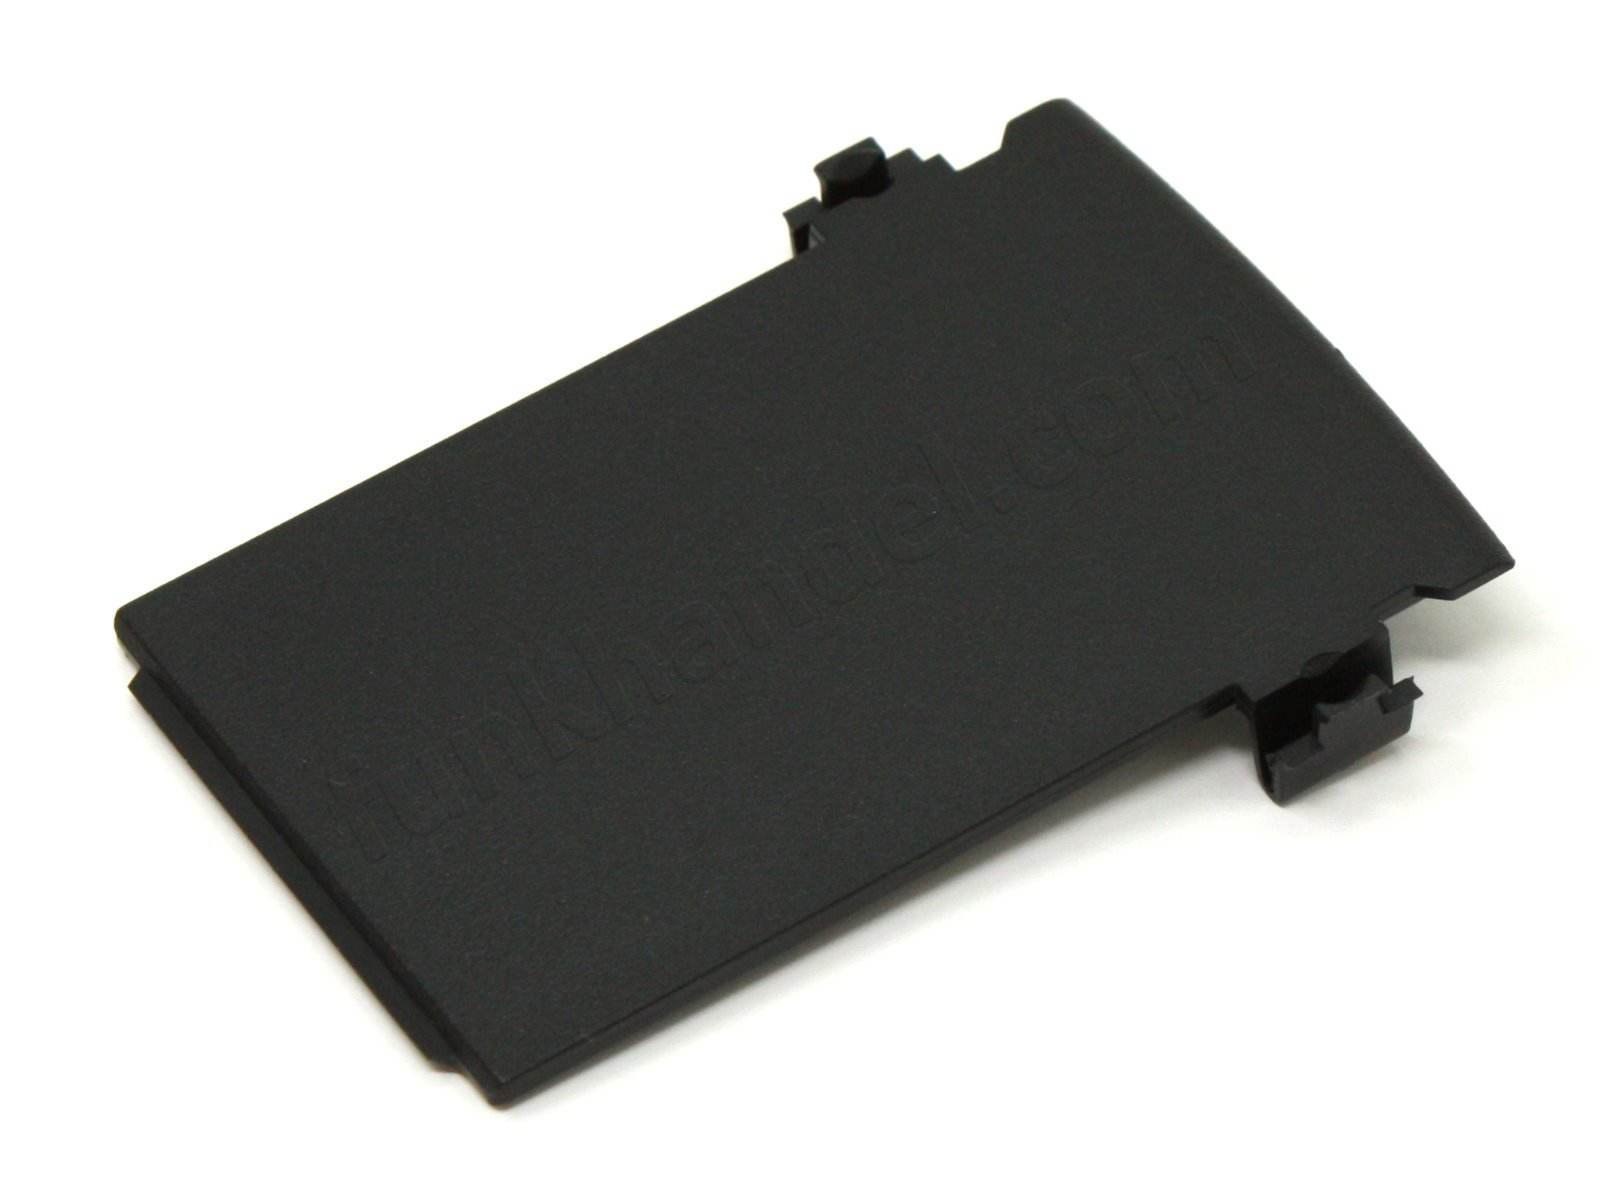 Oelmann Viper LX8 Batteriefachdeckel für 750 mAh Akku